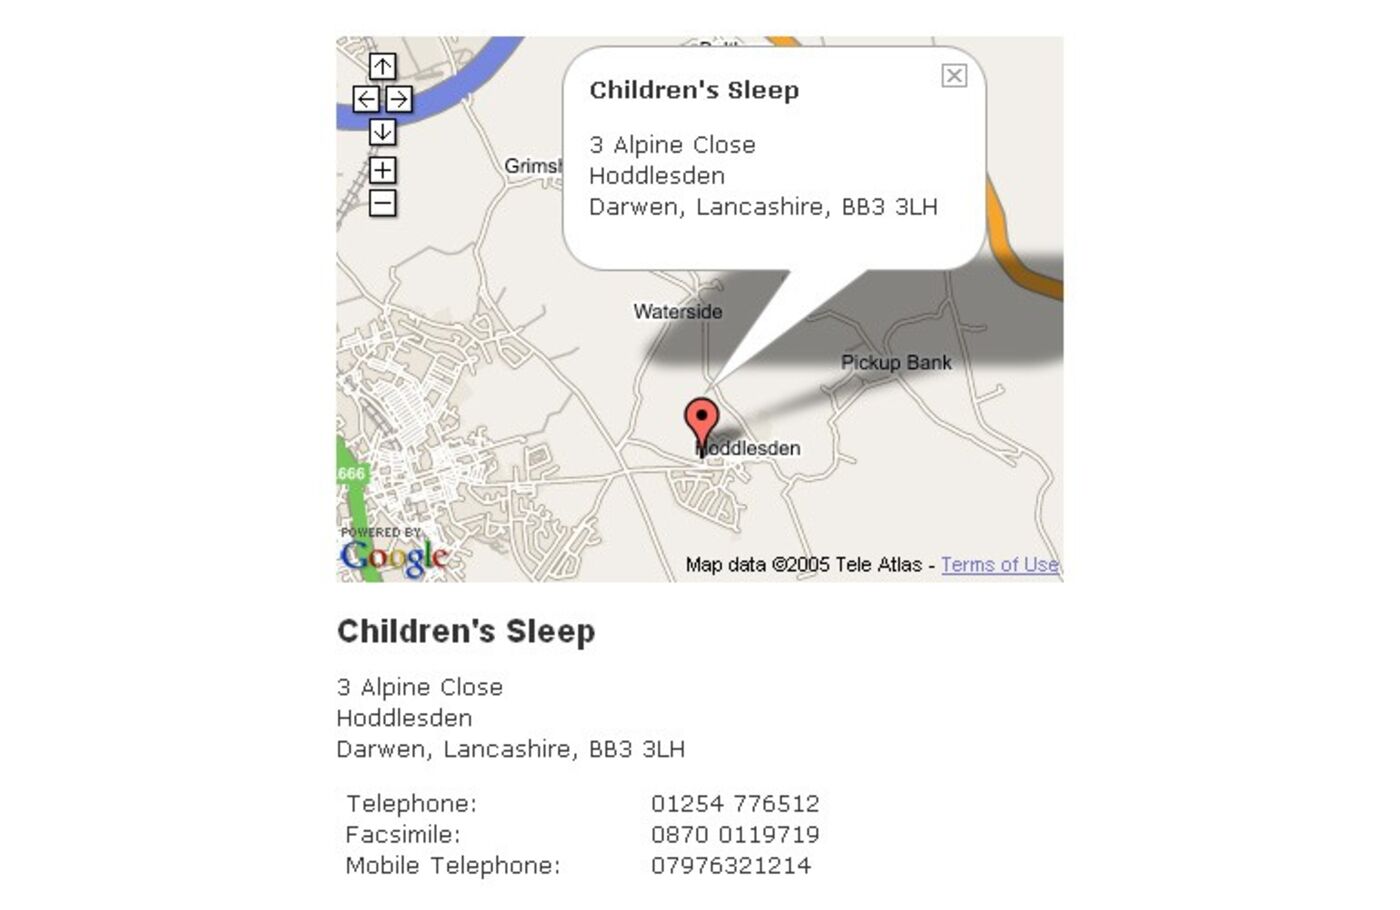 Childrens Sleep Contact details